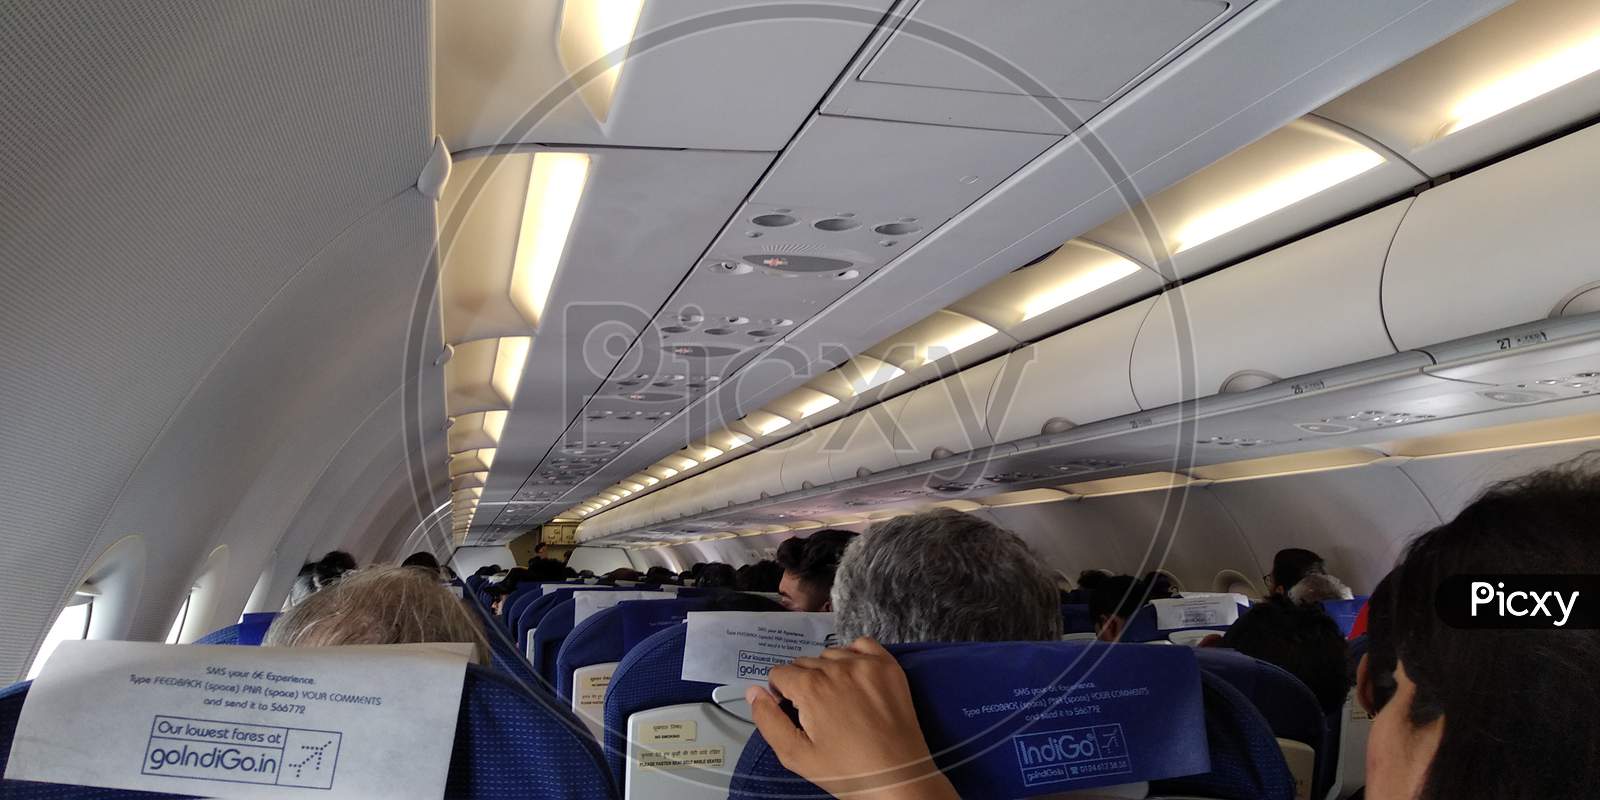 Plane inside view